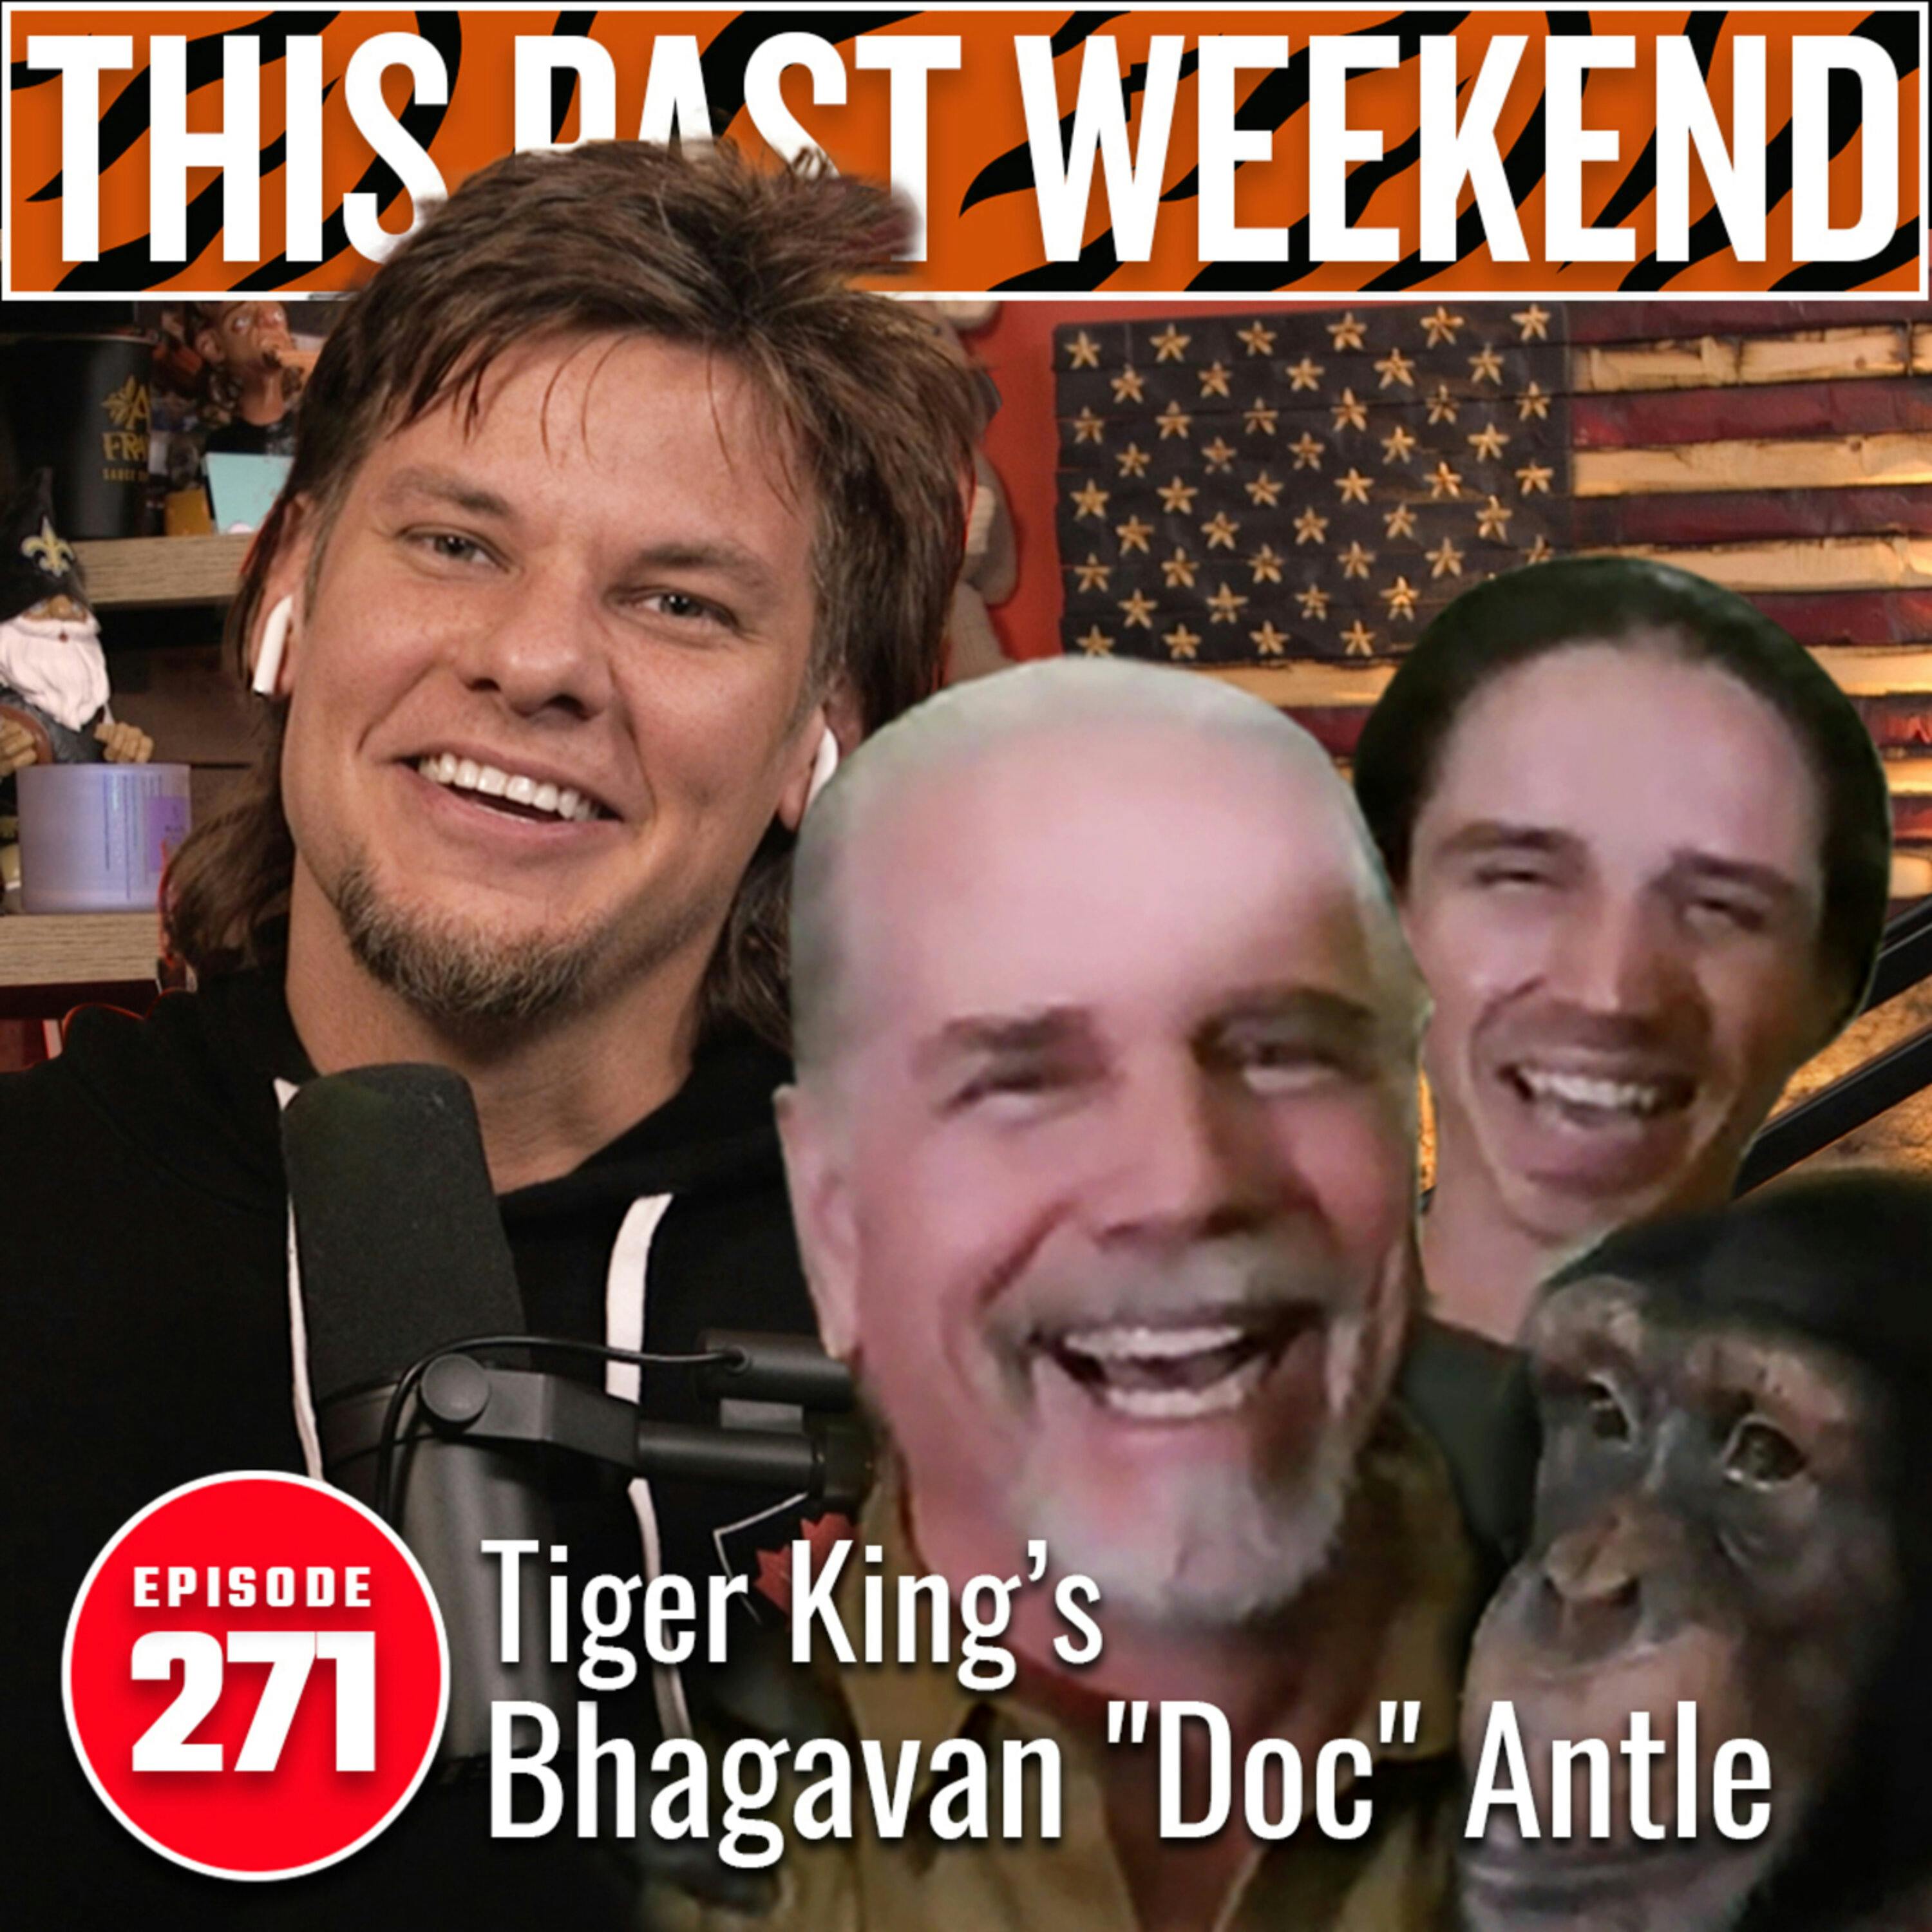 Tiger King's Bhagavan "Doc" Antle | This Past Weekend w/ 271 by Theo Von